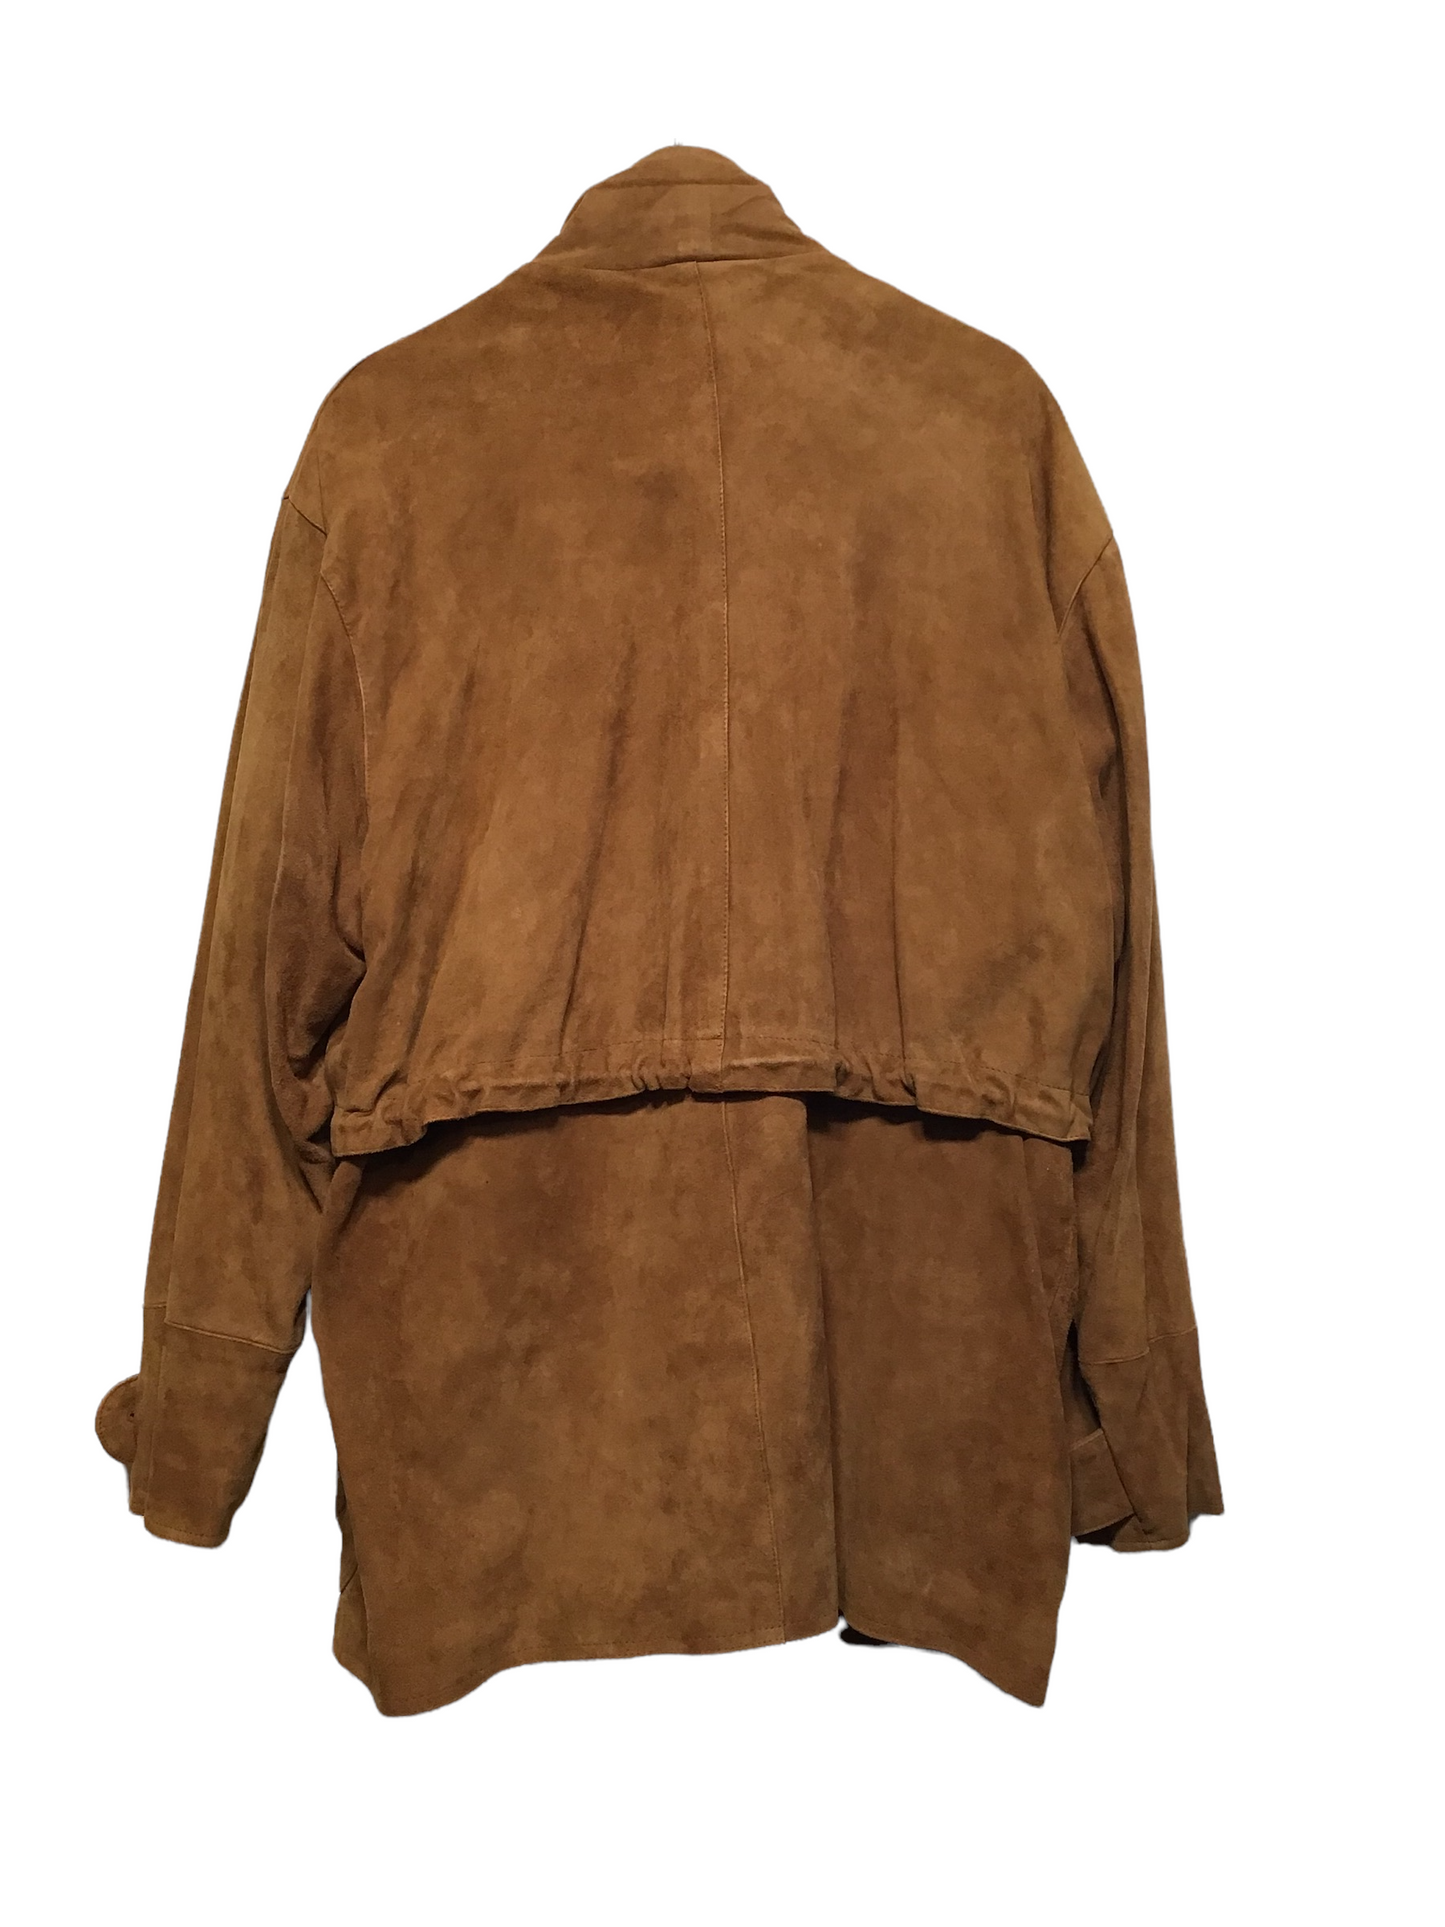 Brown Suede Coat (Size XL)